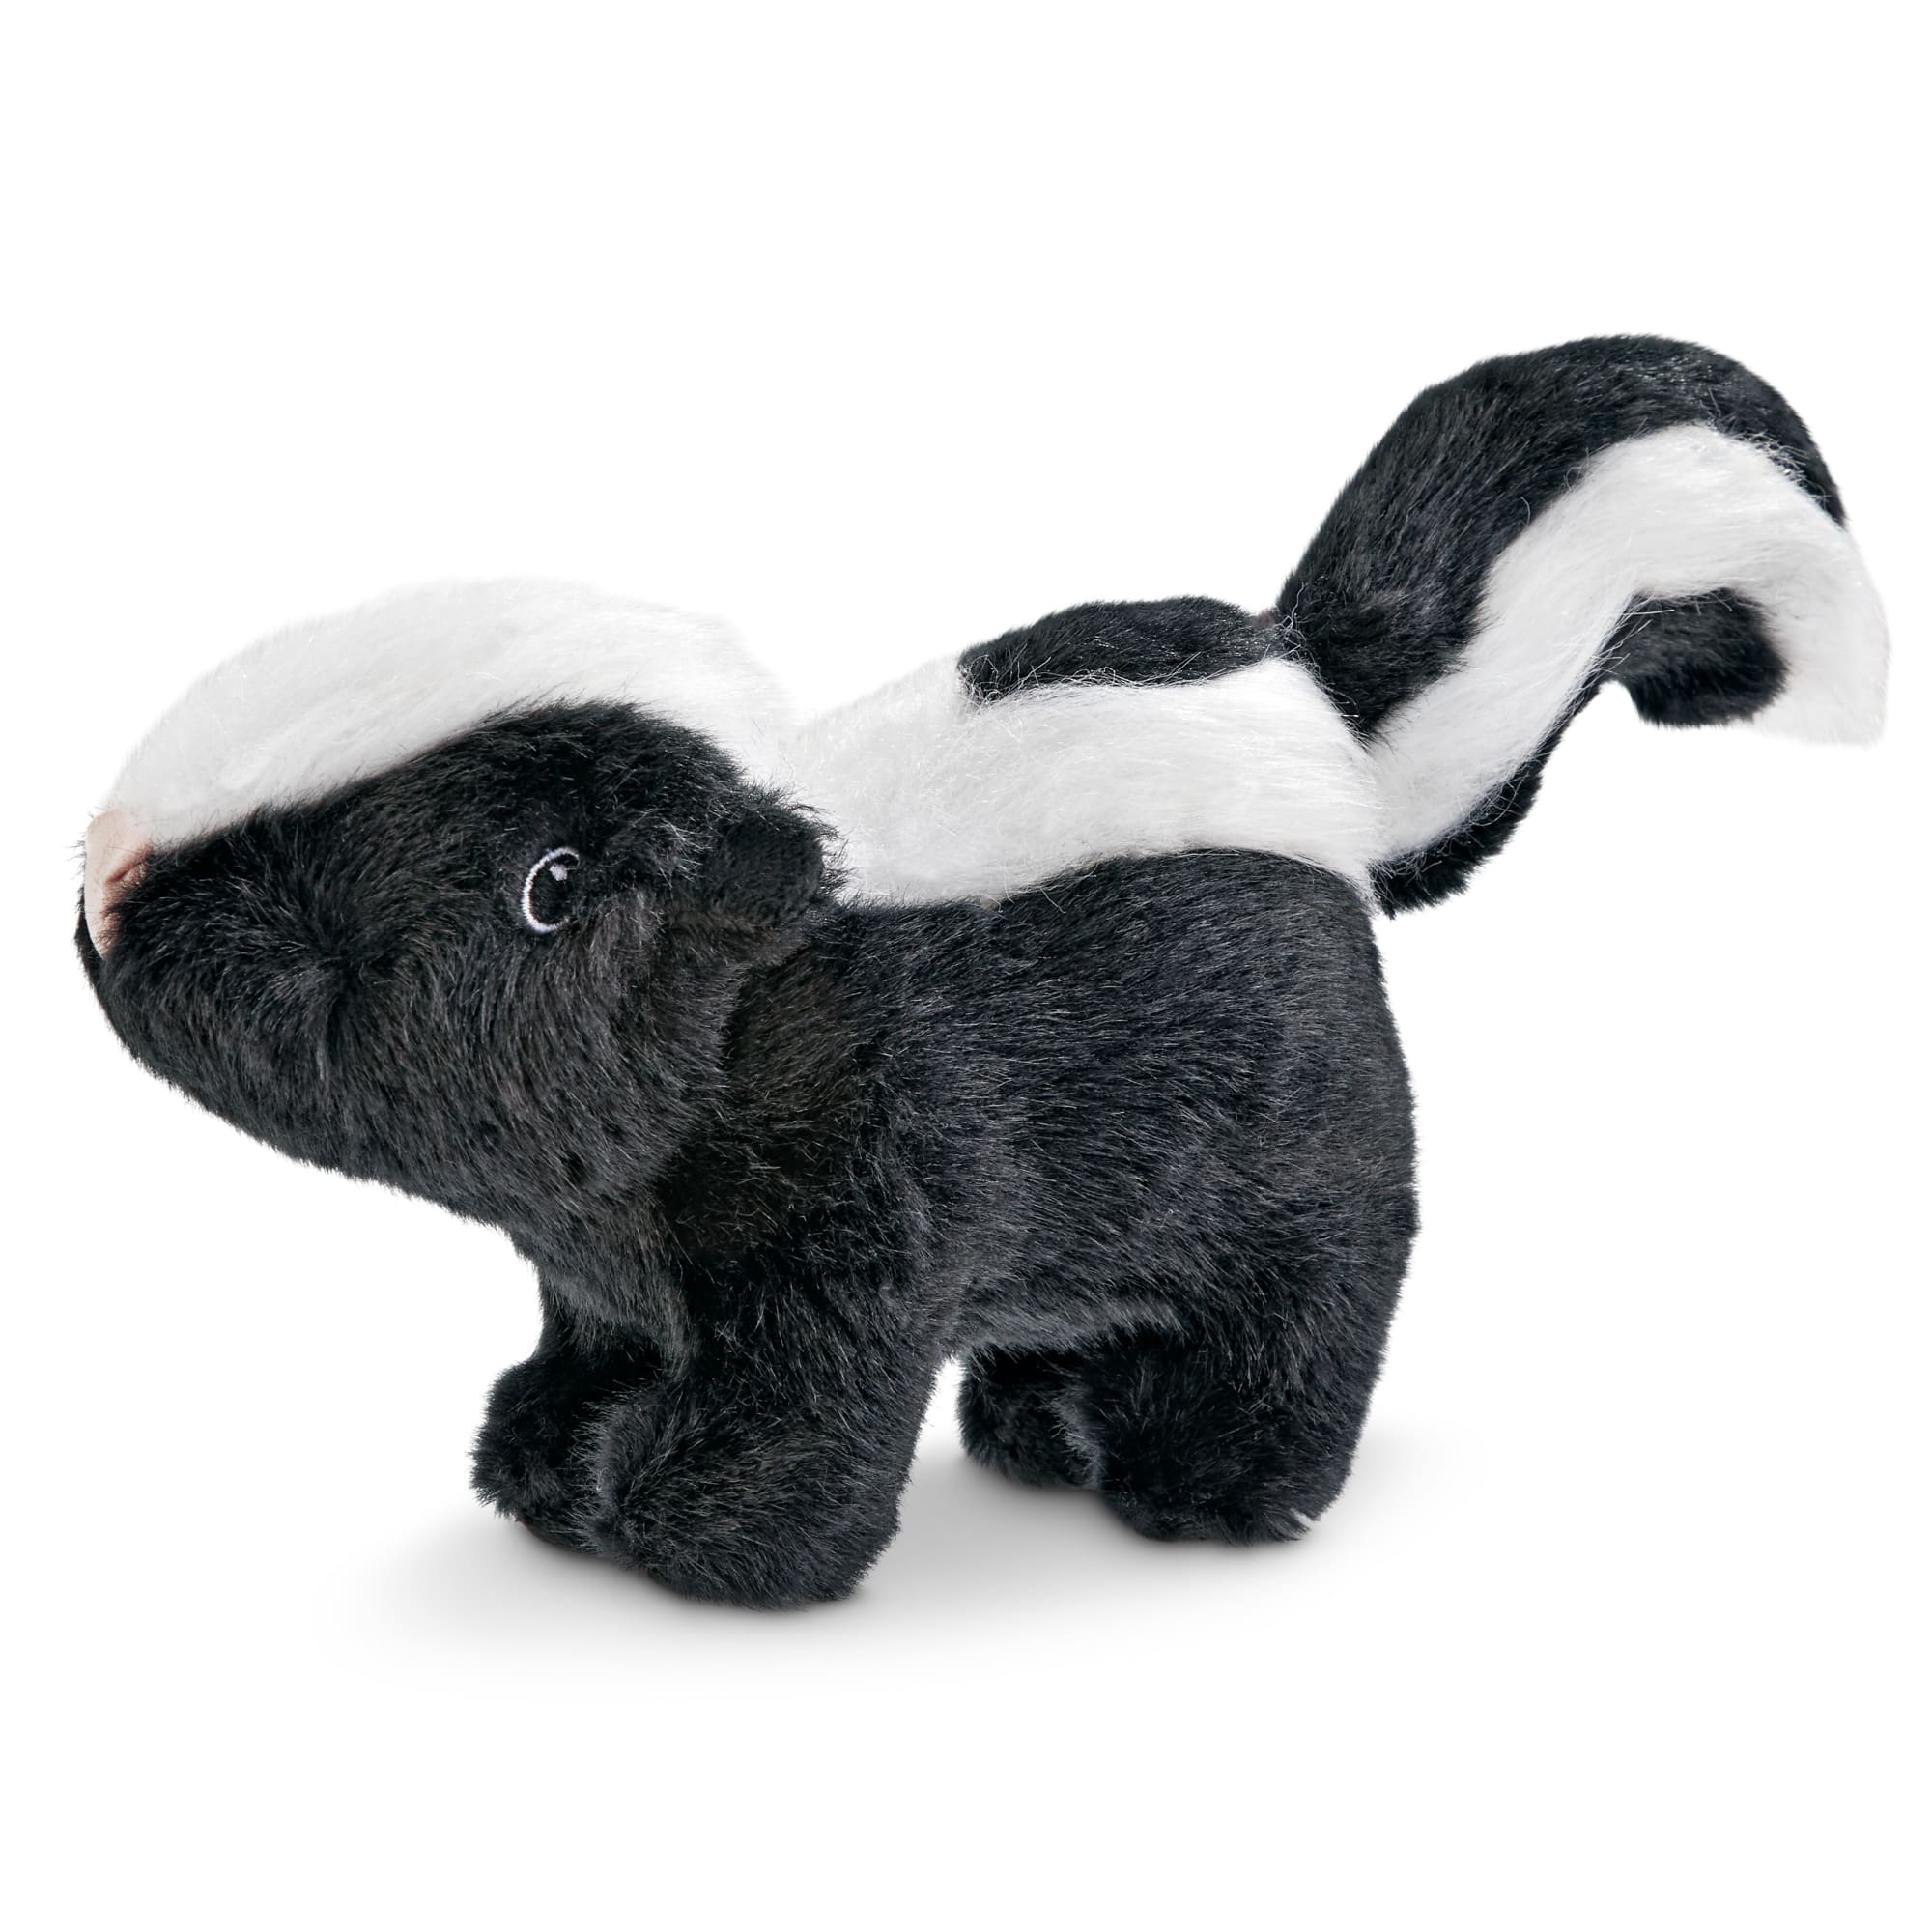 Plush Skunk Toy Stuffed Animal 